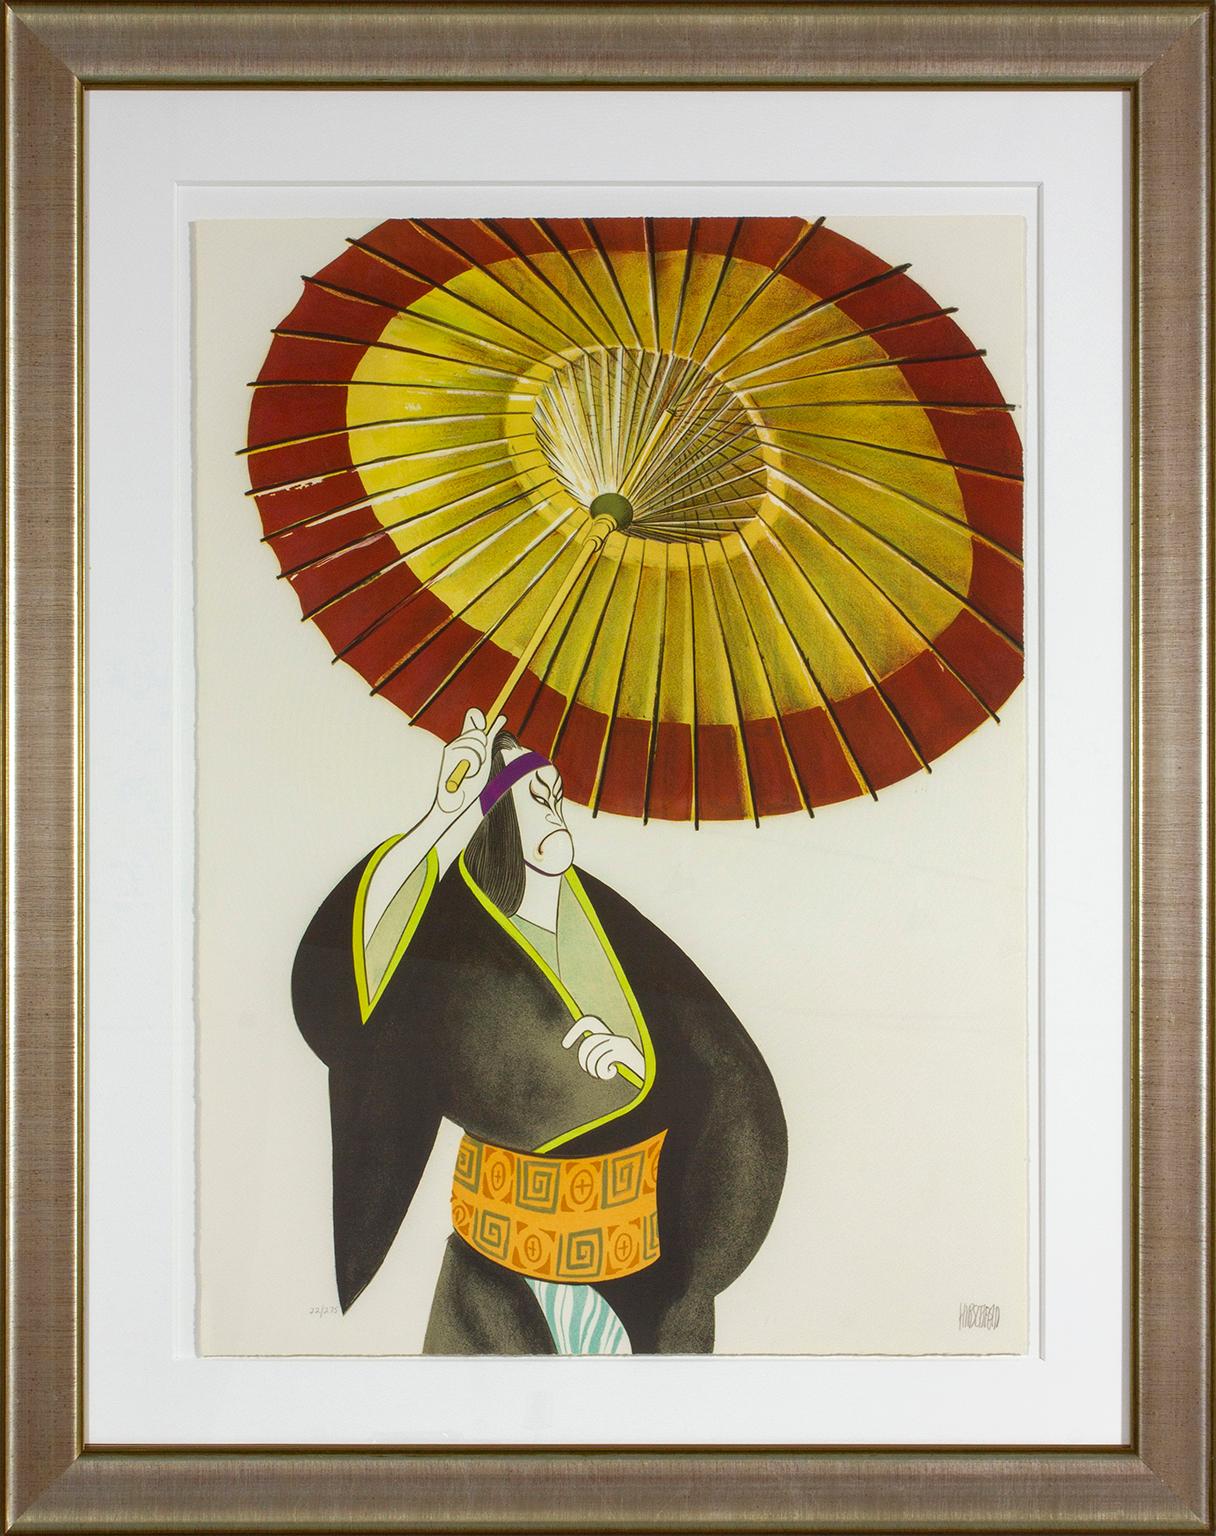 Albert Al Hirschfeld Figurative Print - "Sukeroku" framed, hand-signed lithograph from "Kabuki Suite" by Al Hirschfeld